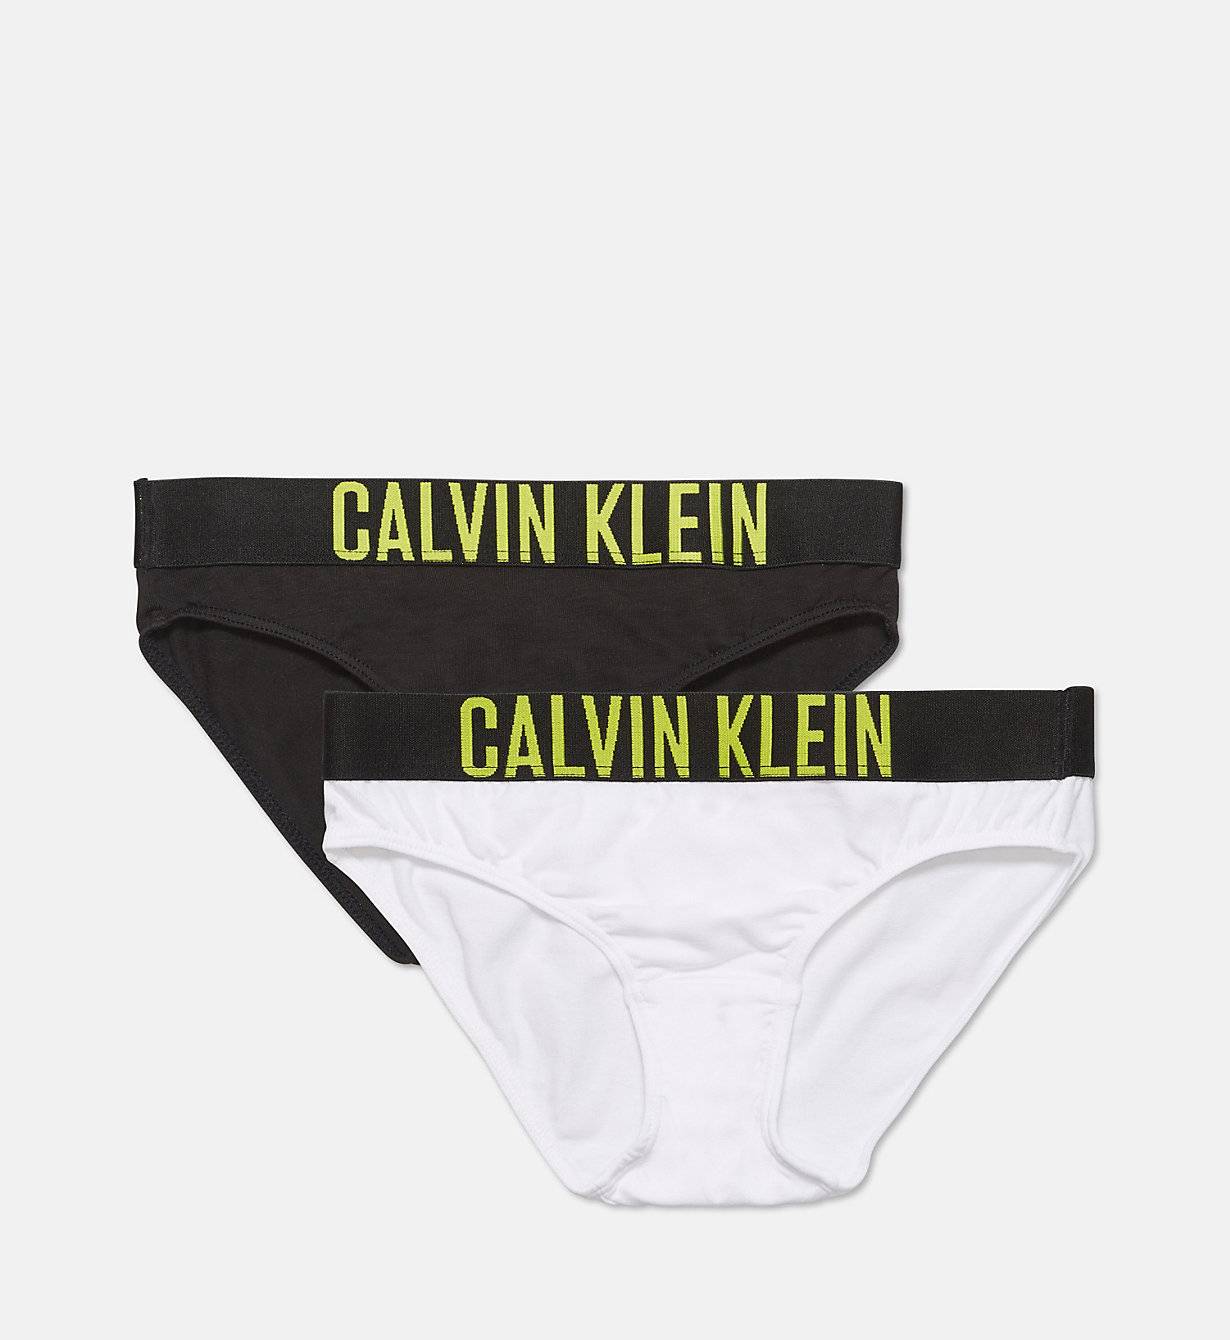 Белье Calvin Klein Интернет Магазин